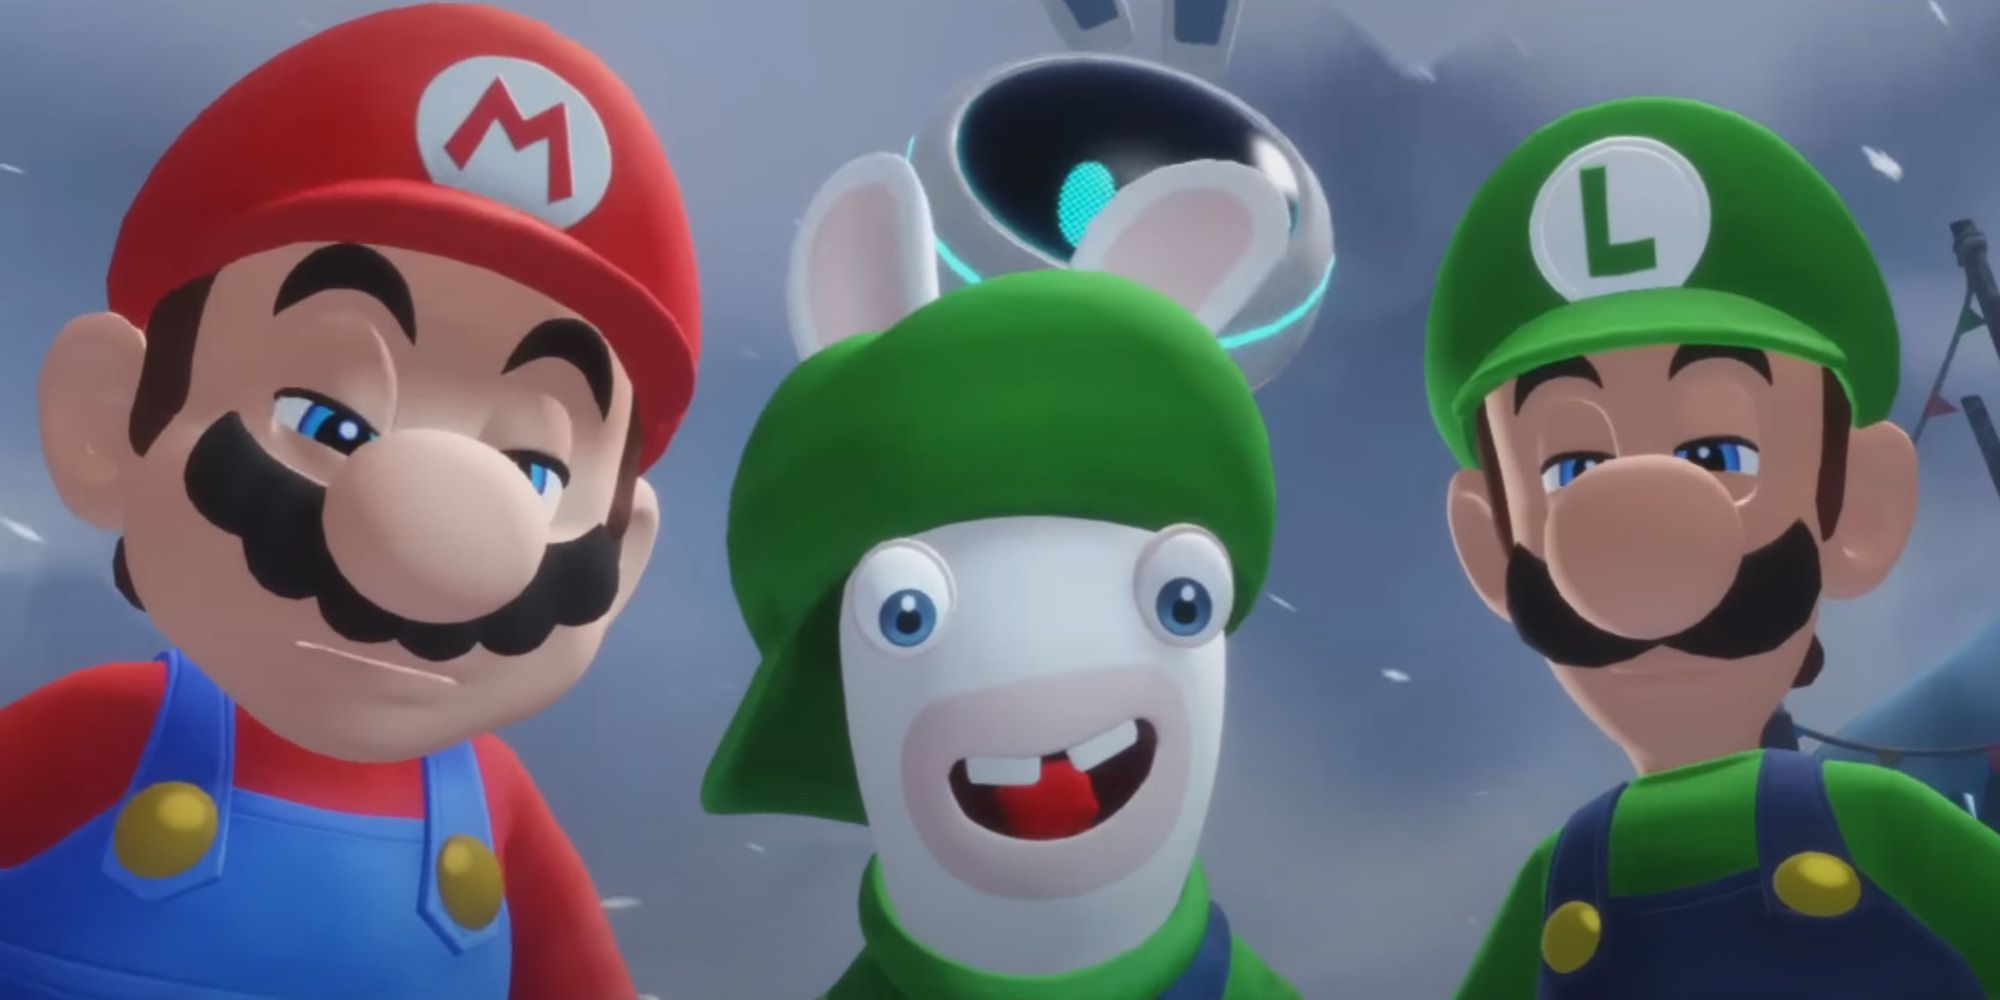 Mario, Rabbid Luigi, and Luigi staring at the camera.